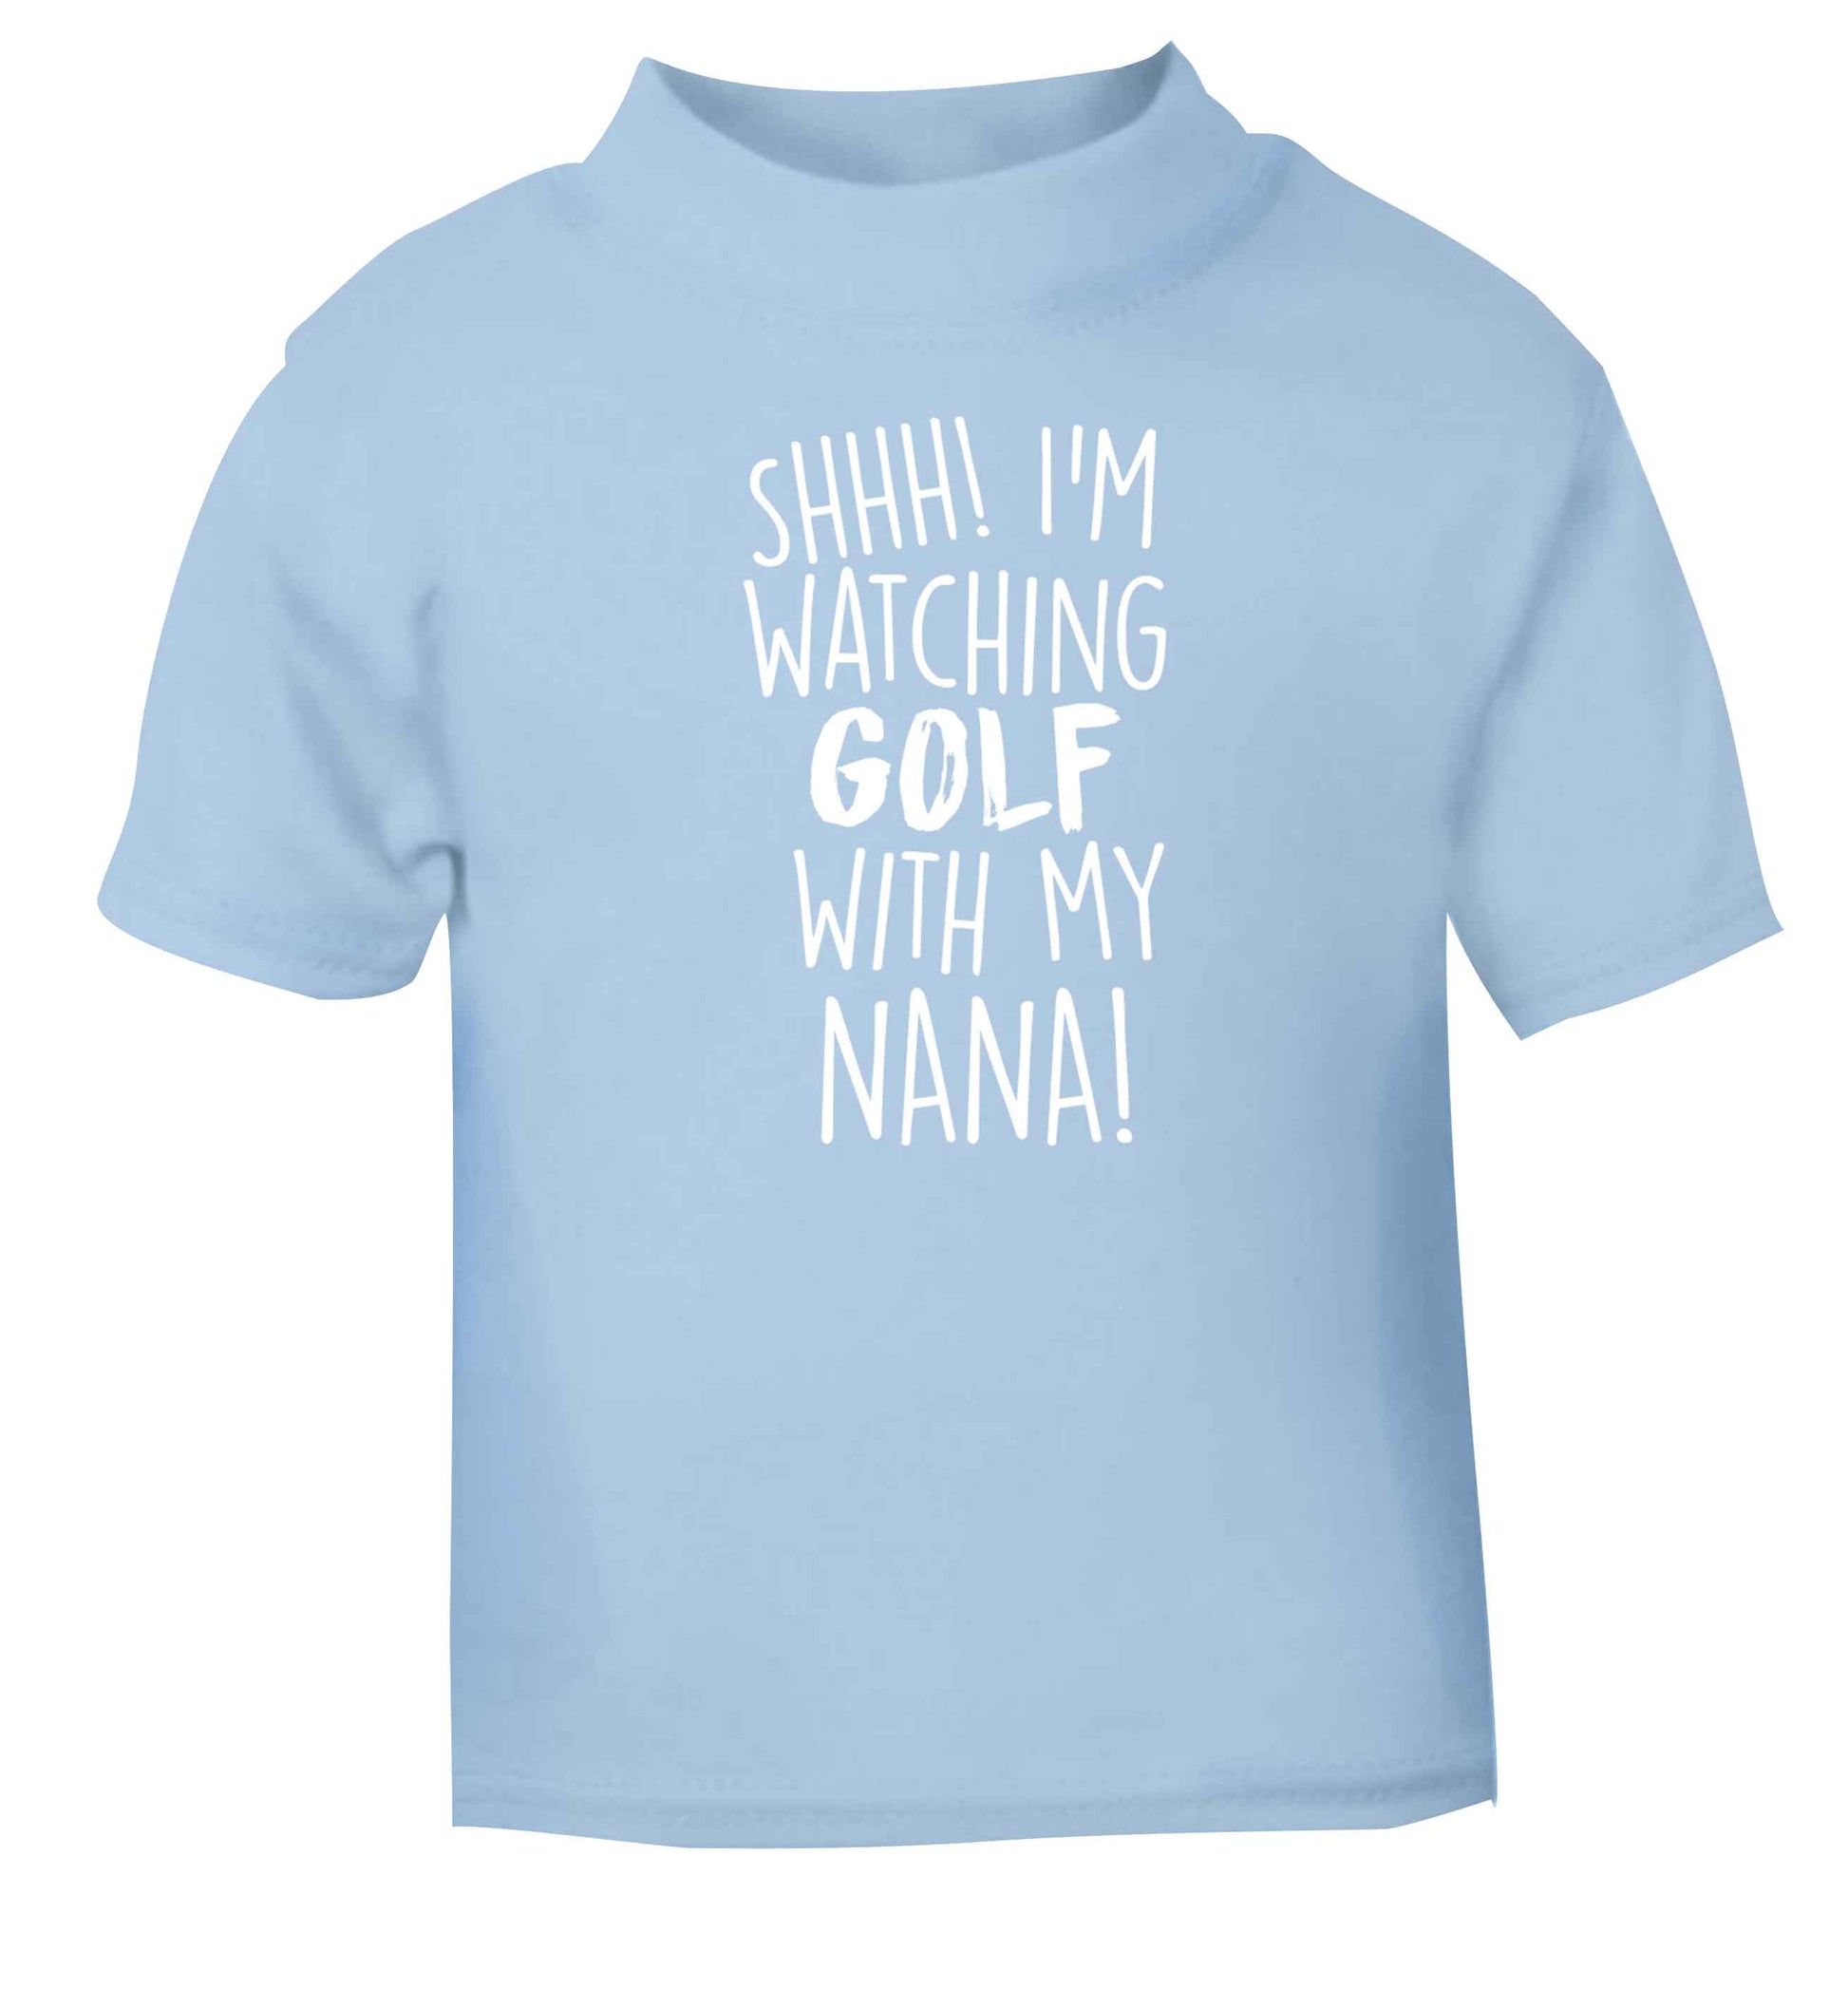 Shh I'm watching golf with my nana light blue Baby Toddler Tshirt 2 Years